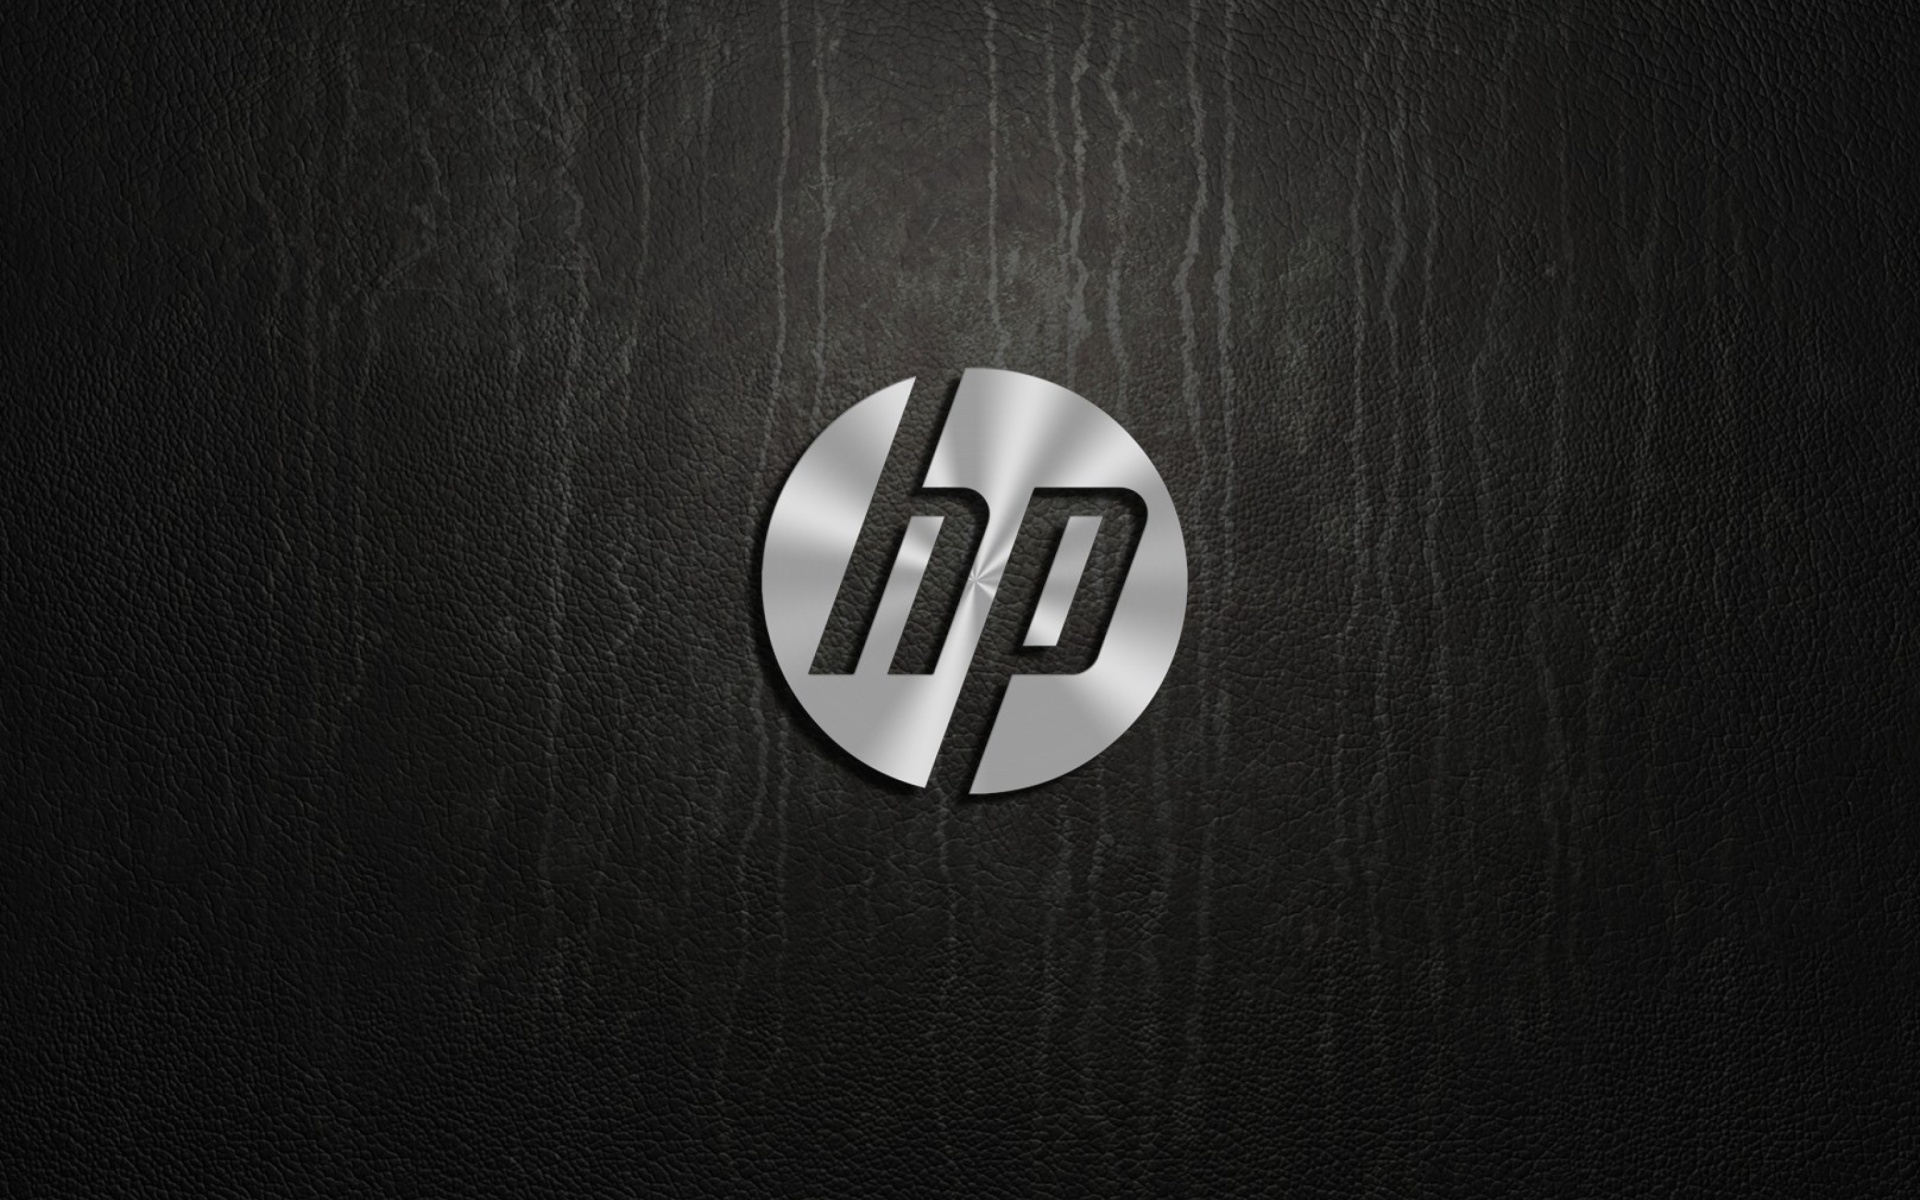 HP Dark Logo Wallpaper for Widescreen Desktop PC 1920x1080 Full HD